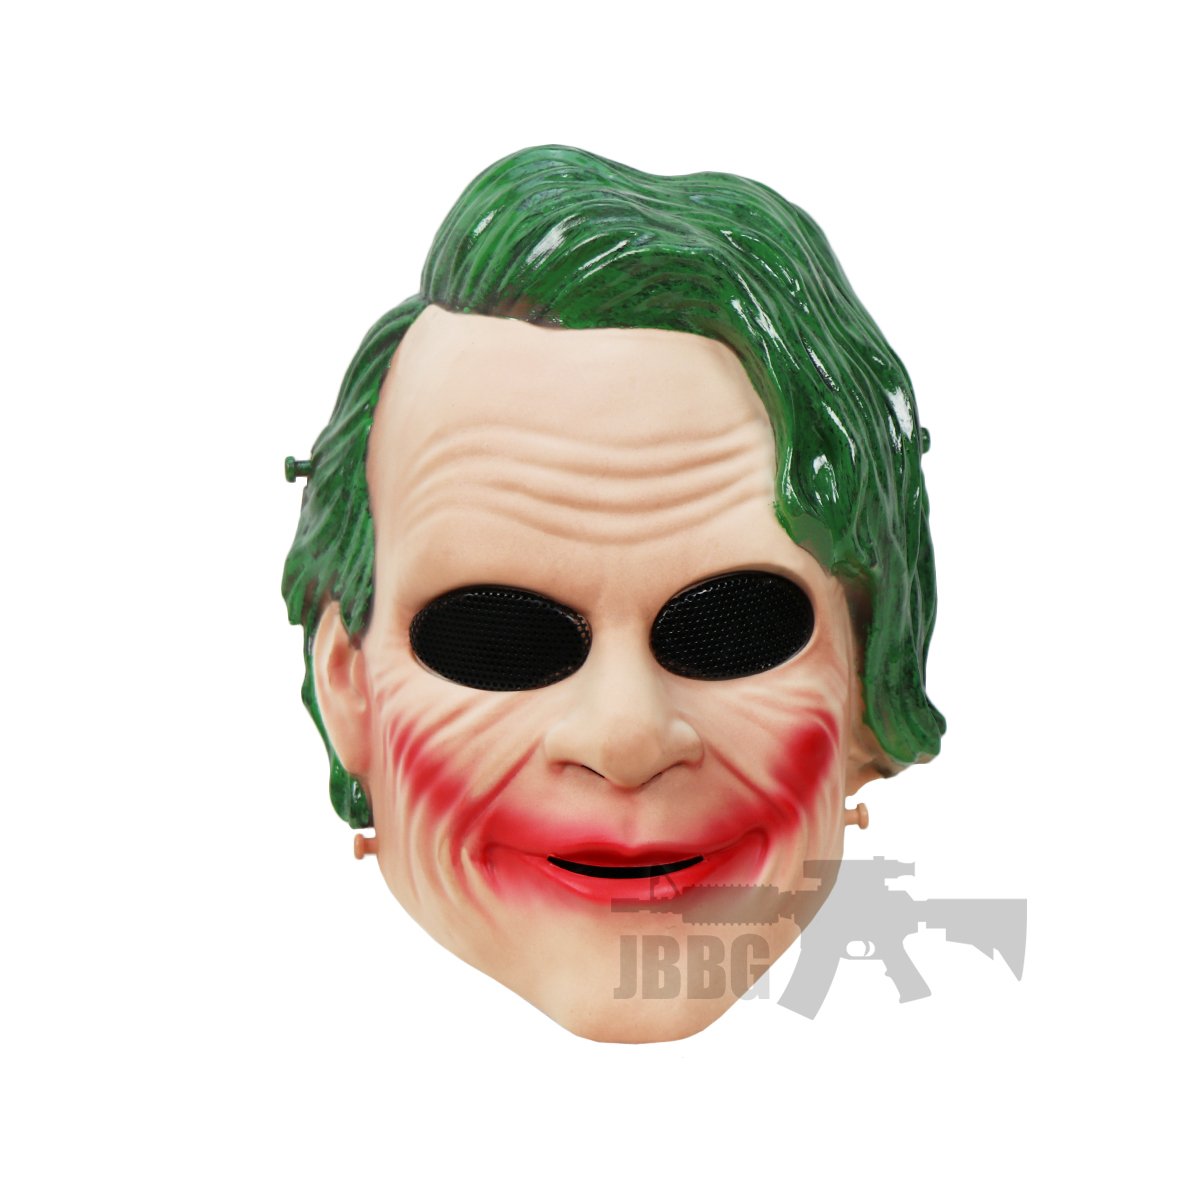 Joker Style Airsoft Mask - Just BB Guns Ireland